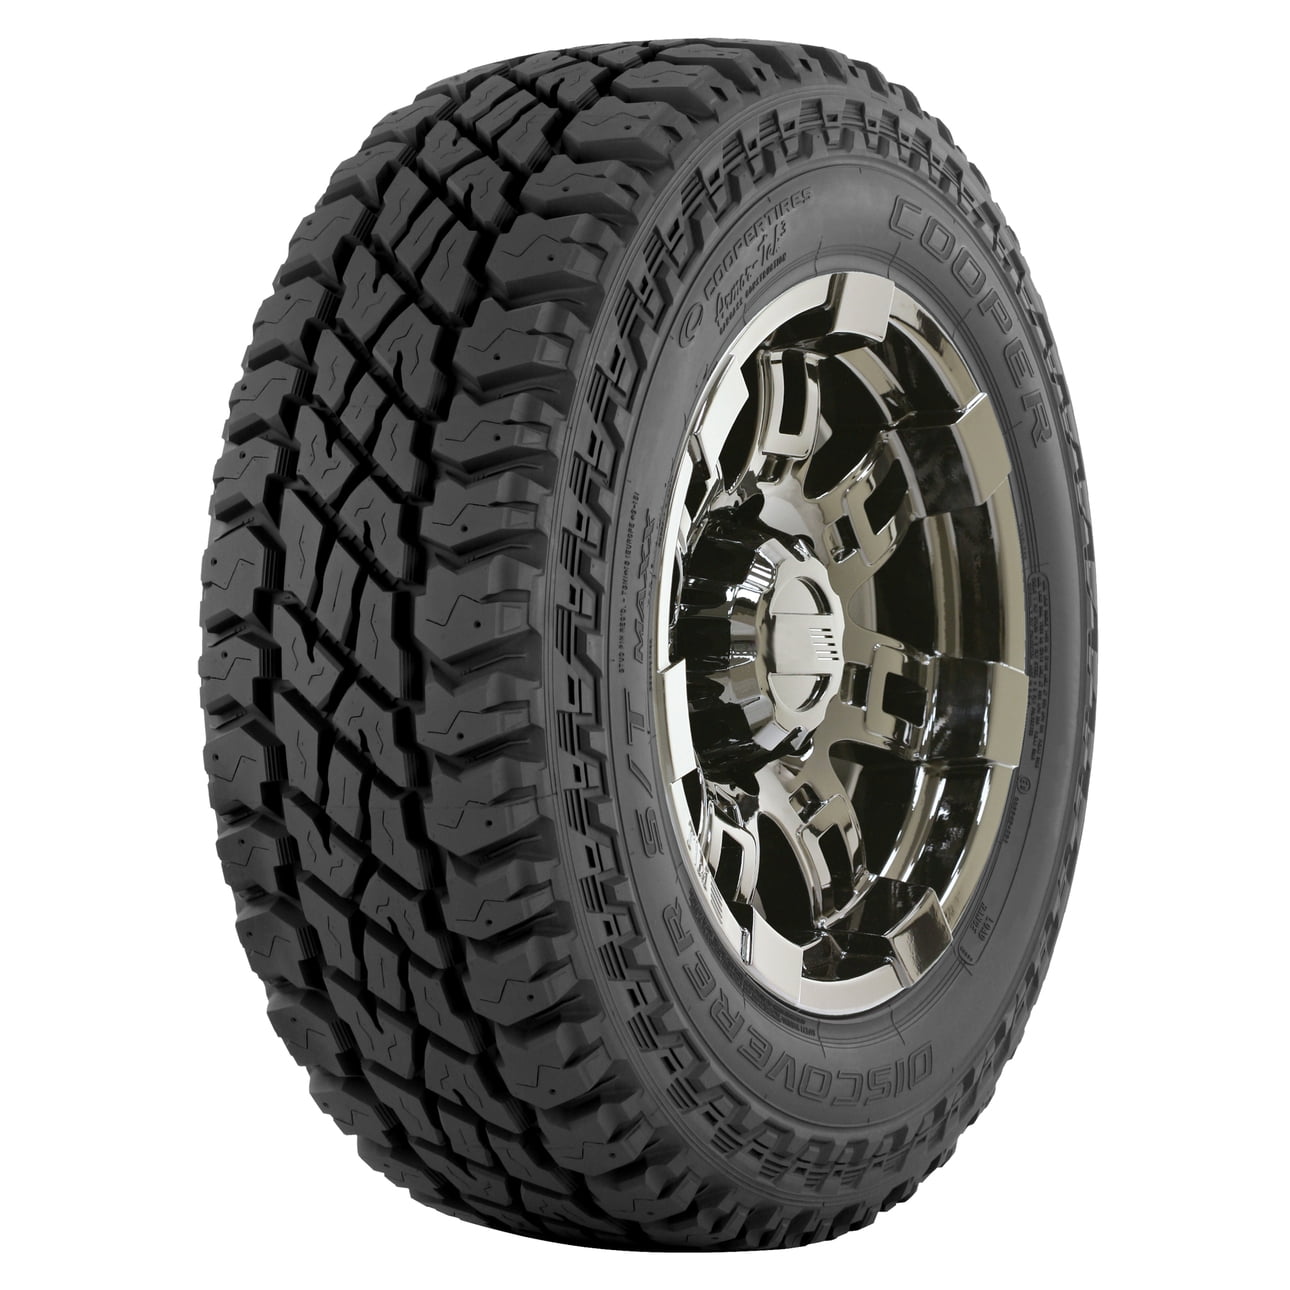 Cooper Discoverer SRX All-Season 245/65R17 107T Tire